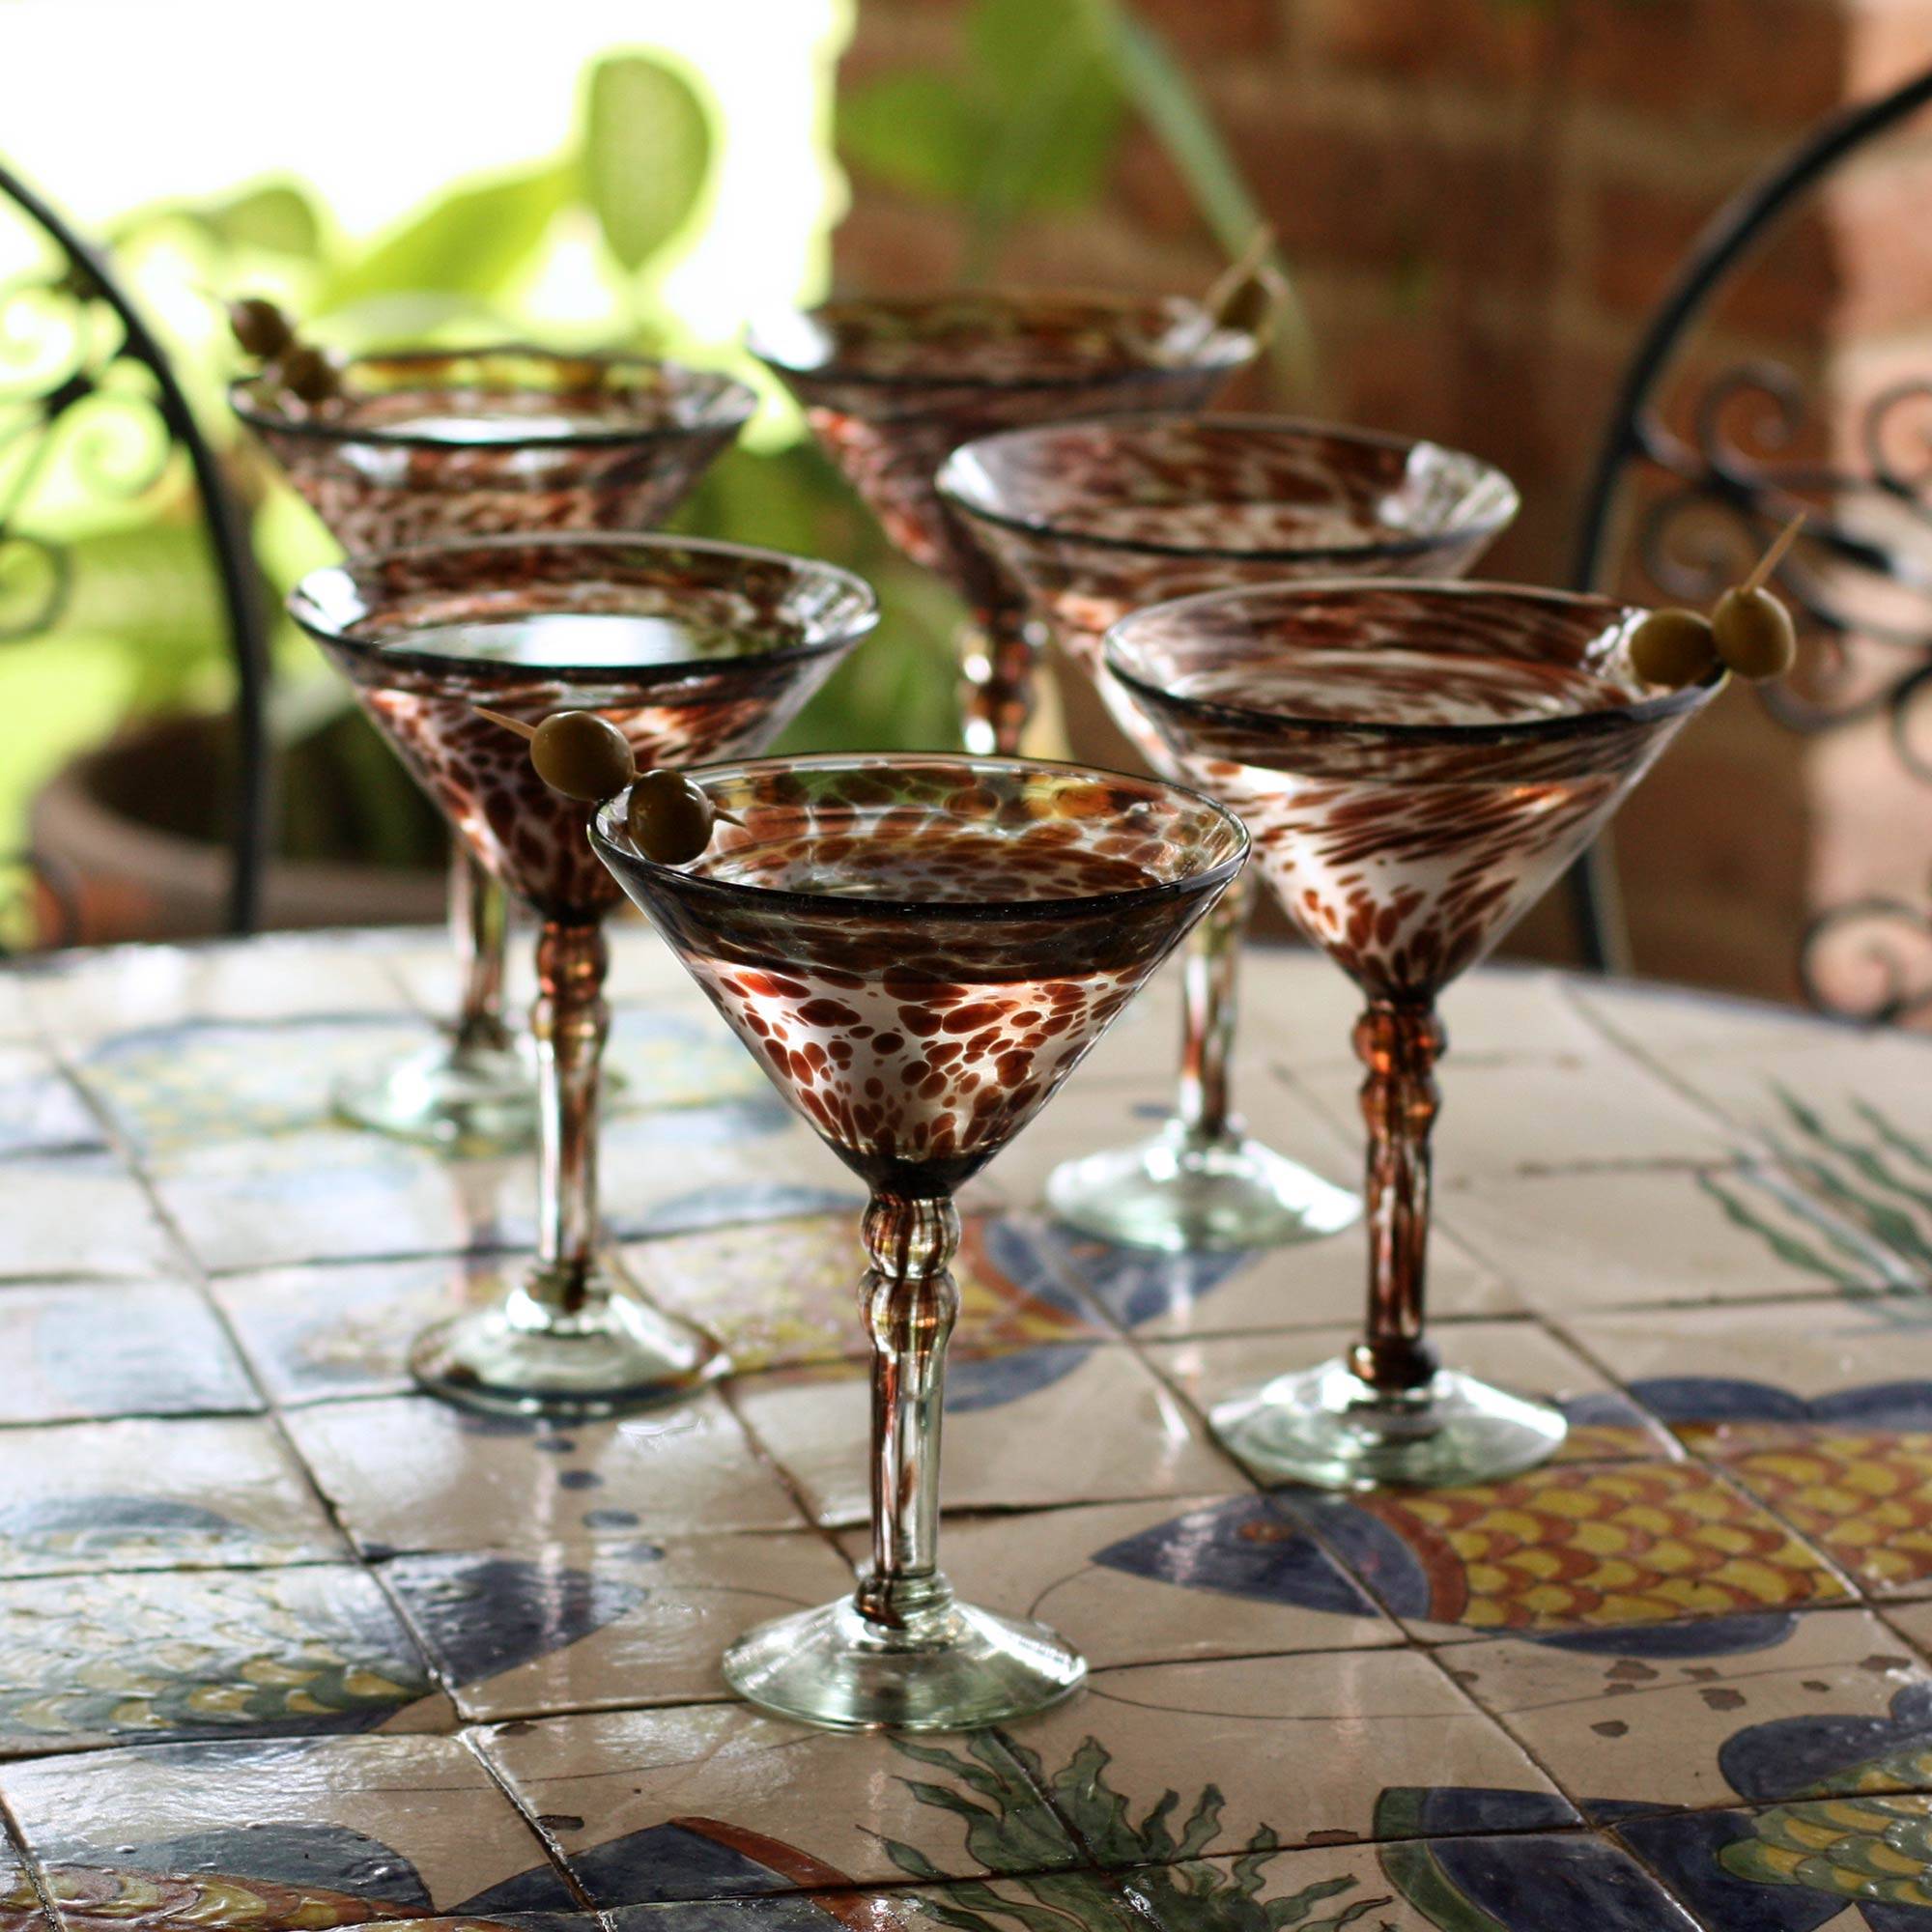 Martini glasses, 'Amethyst Swirl' (set of 6) Glassware for Your Home Bar